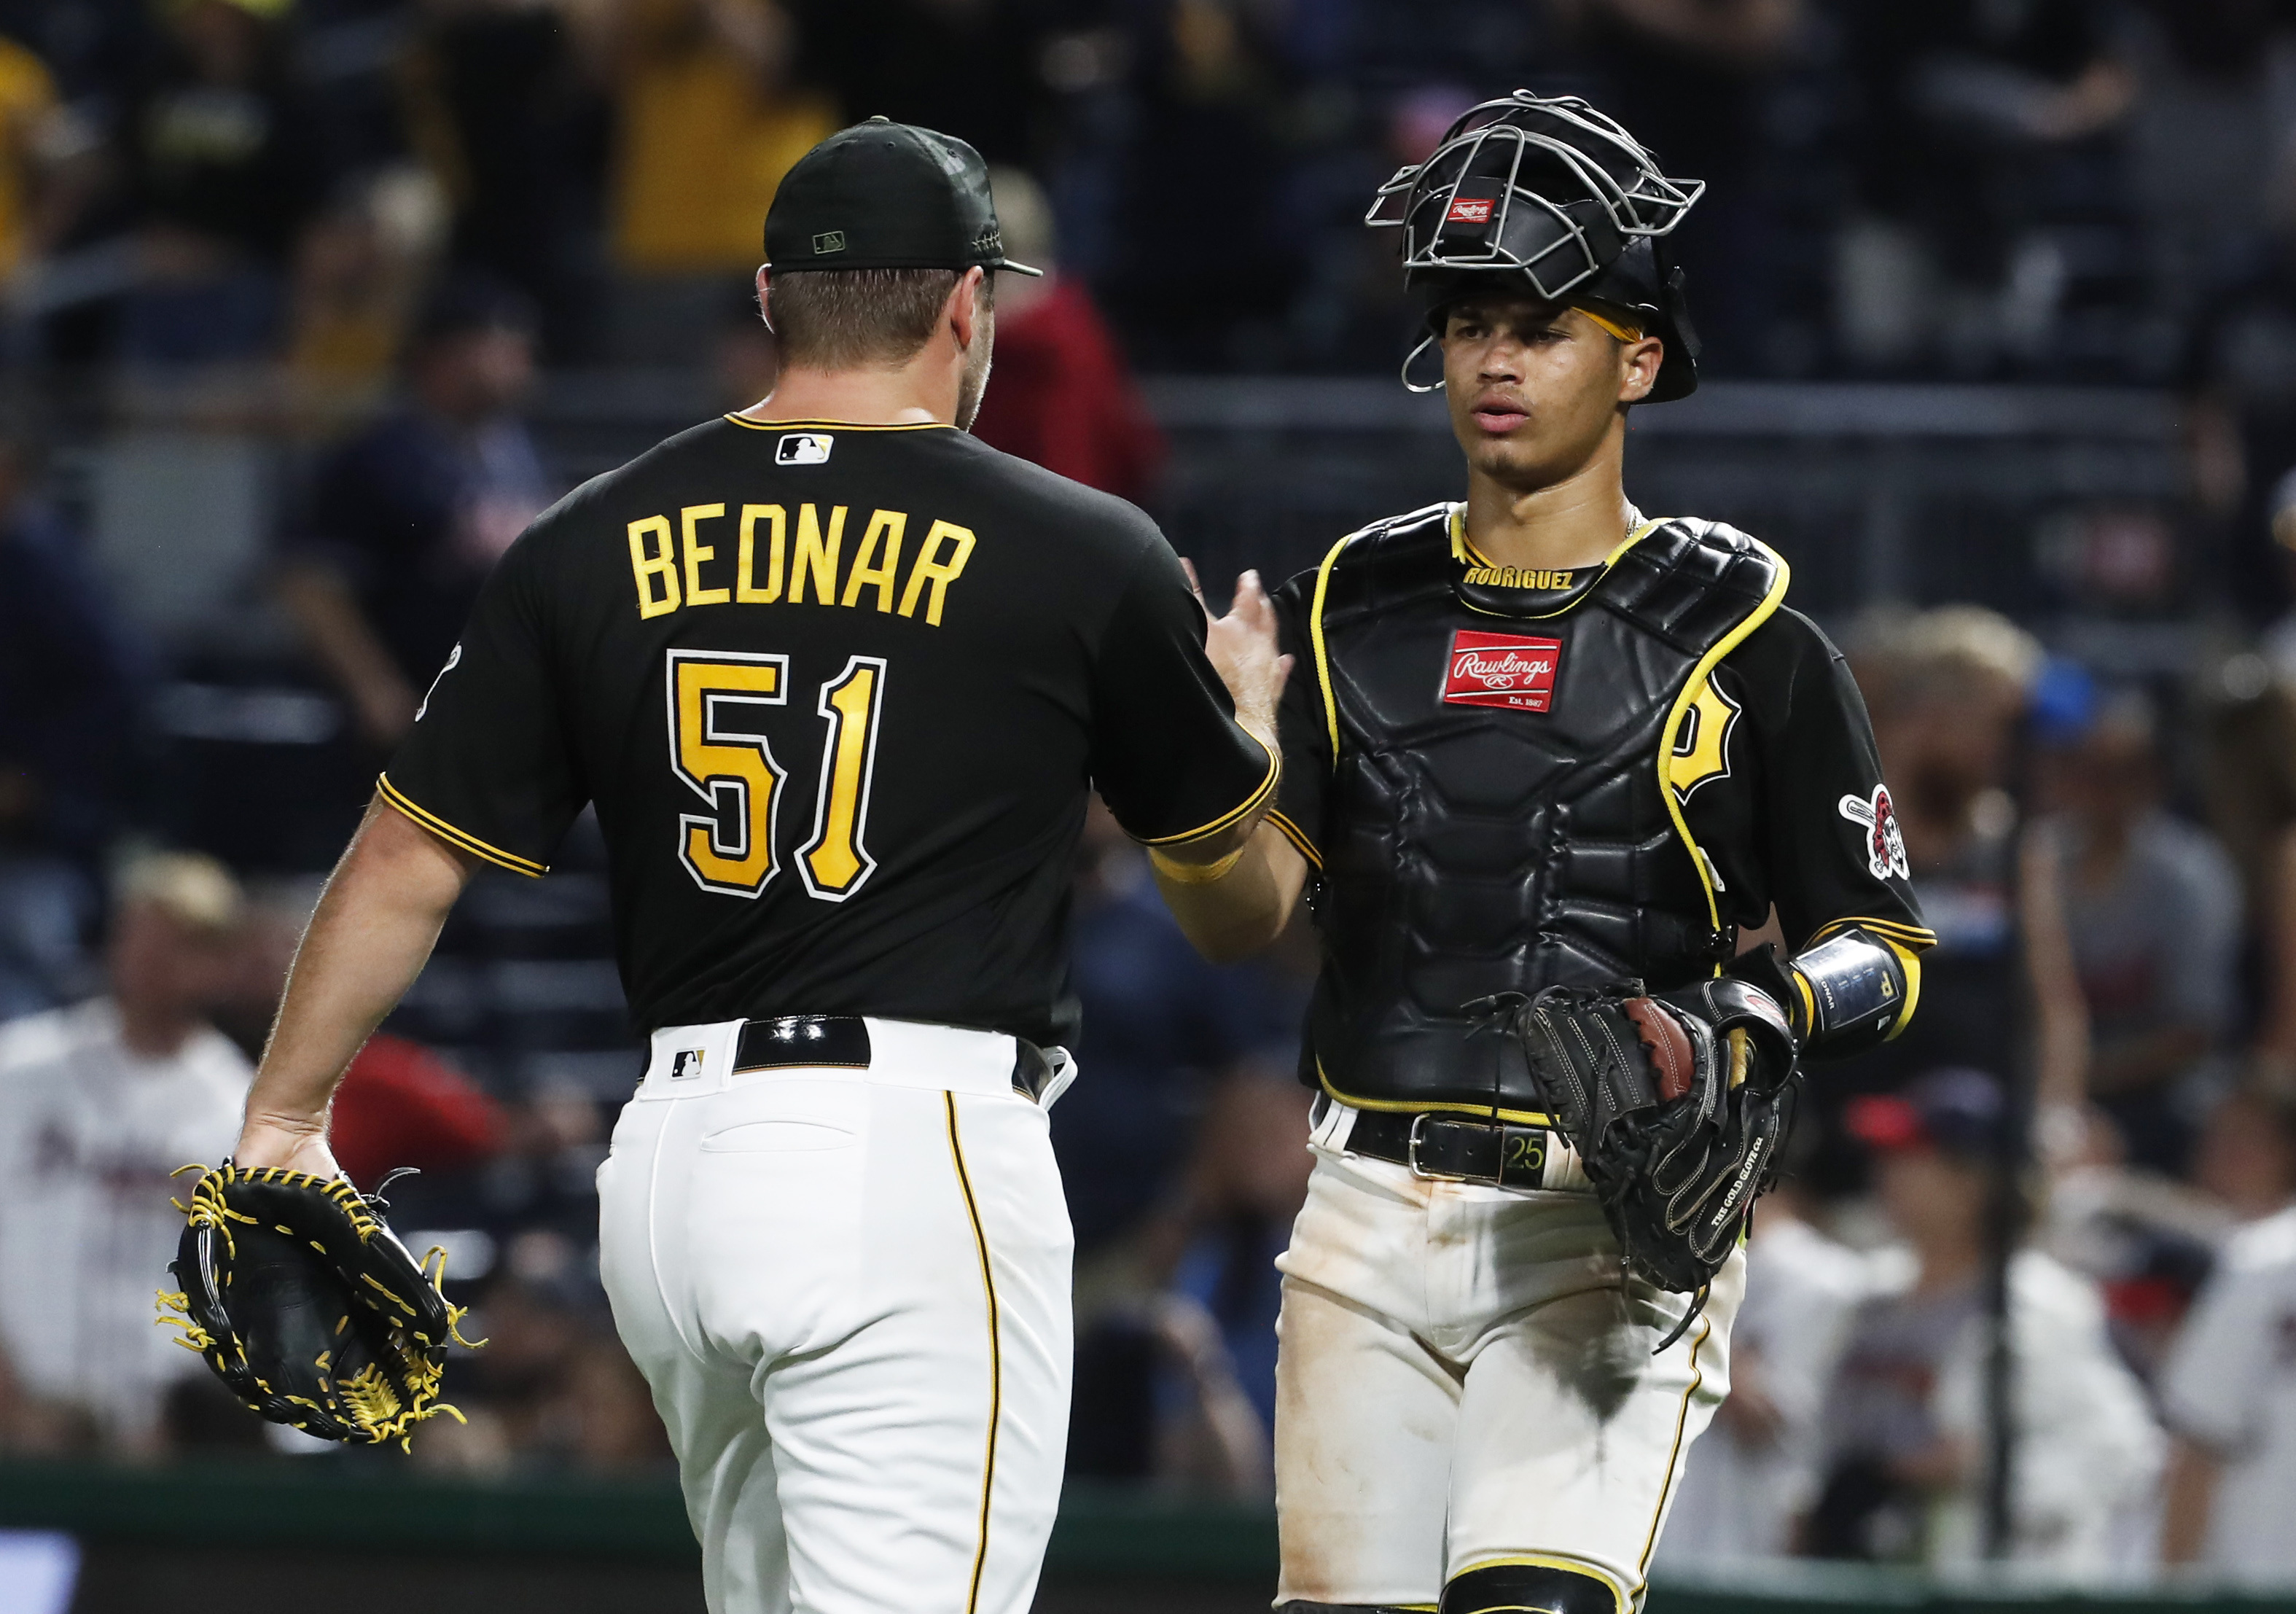 Pirates lean on big third inning to edge Braves